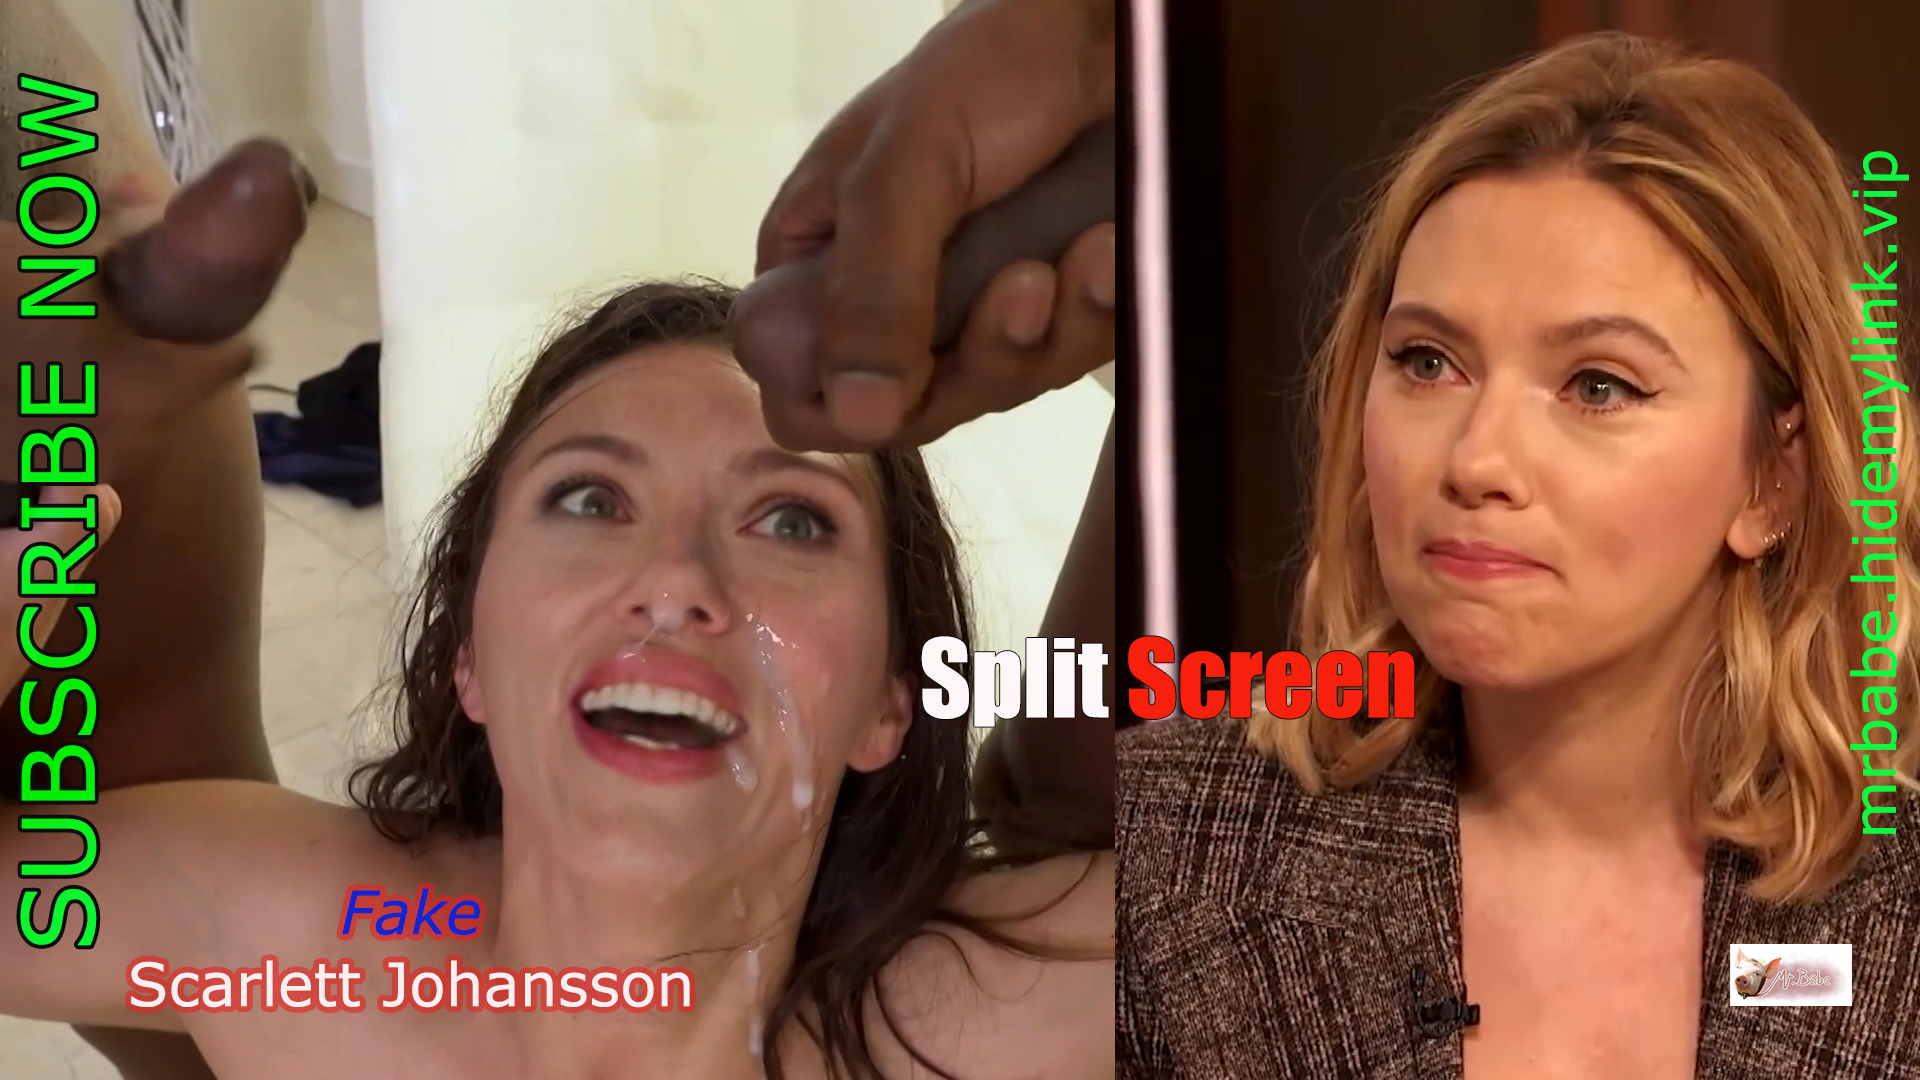 Fake Scarlett Johansson (trailer) / Split Screen / Free Download